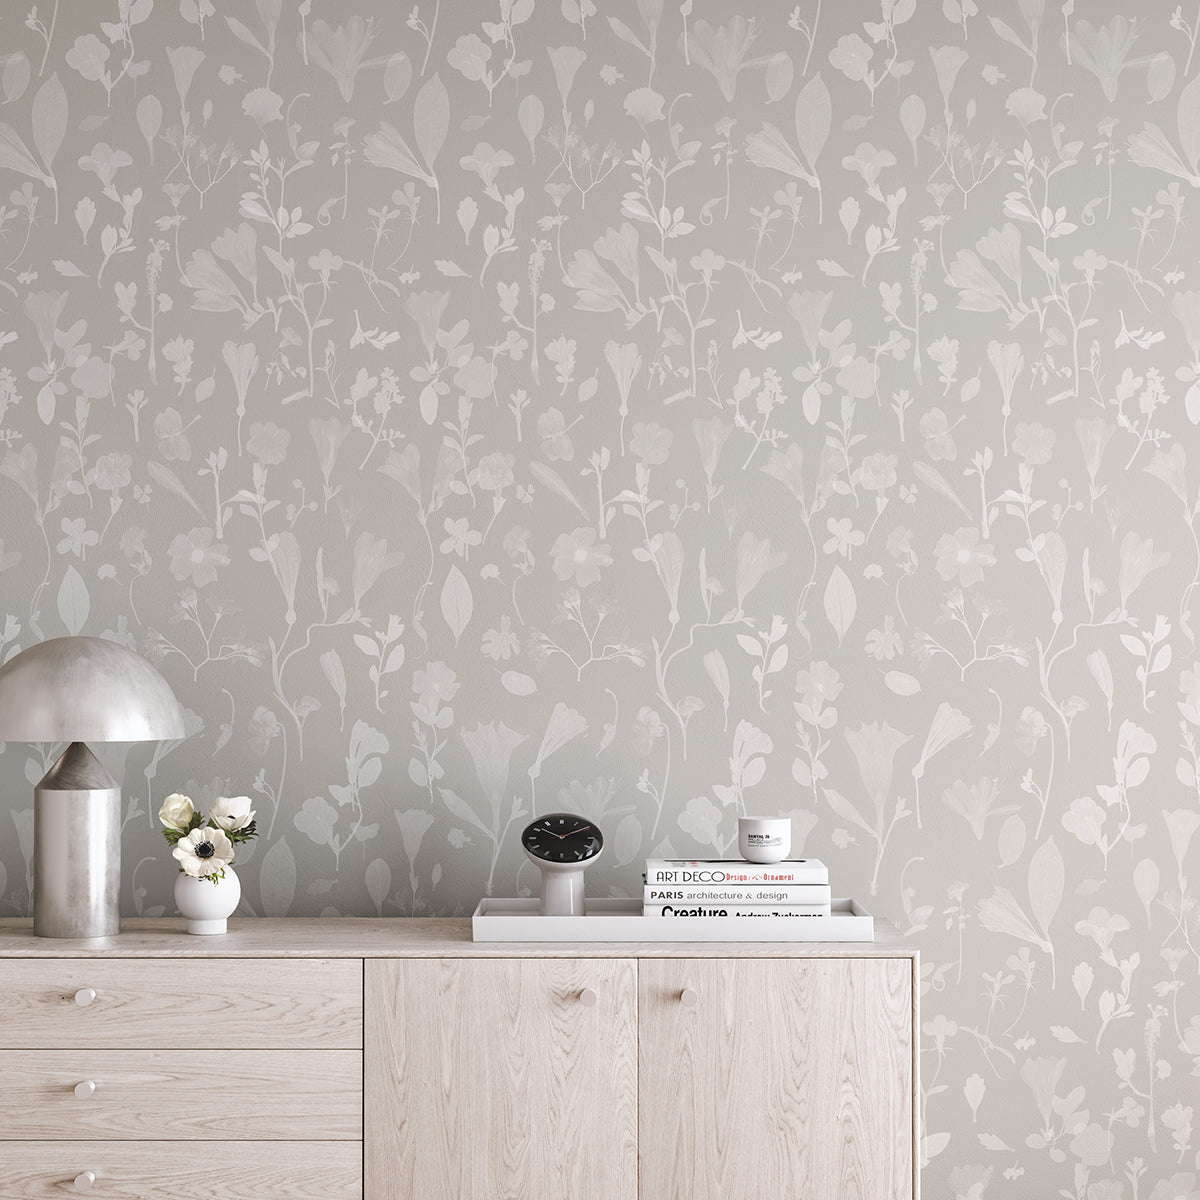 Botanic Bloom© Wallpaper in Grey